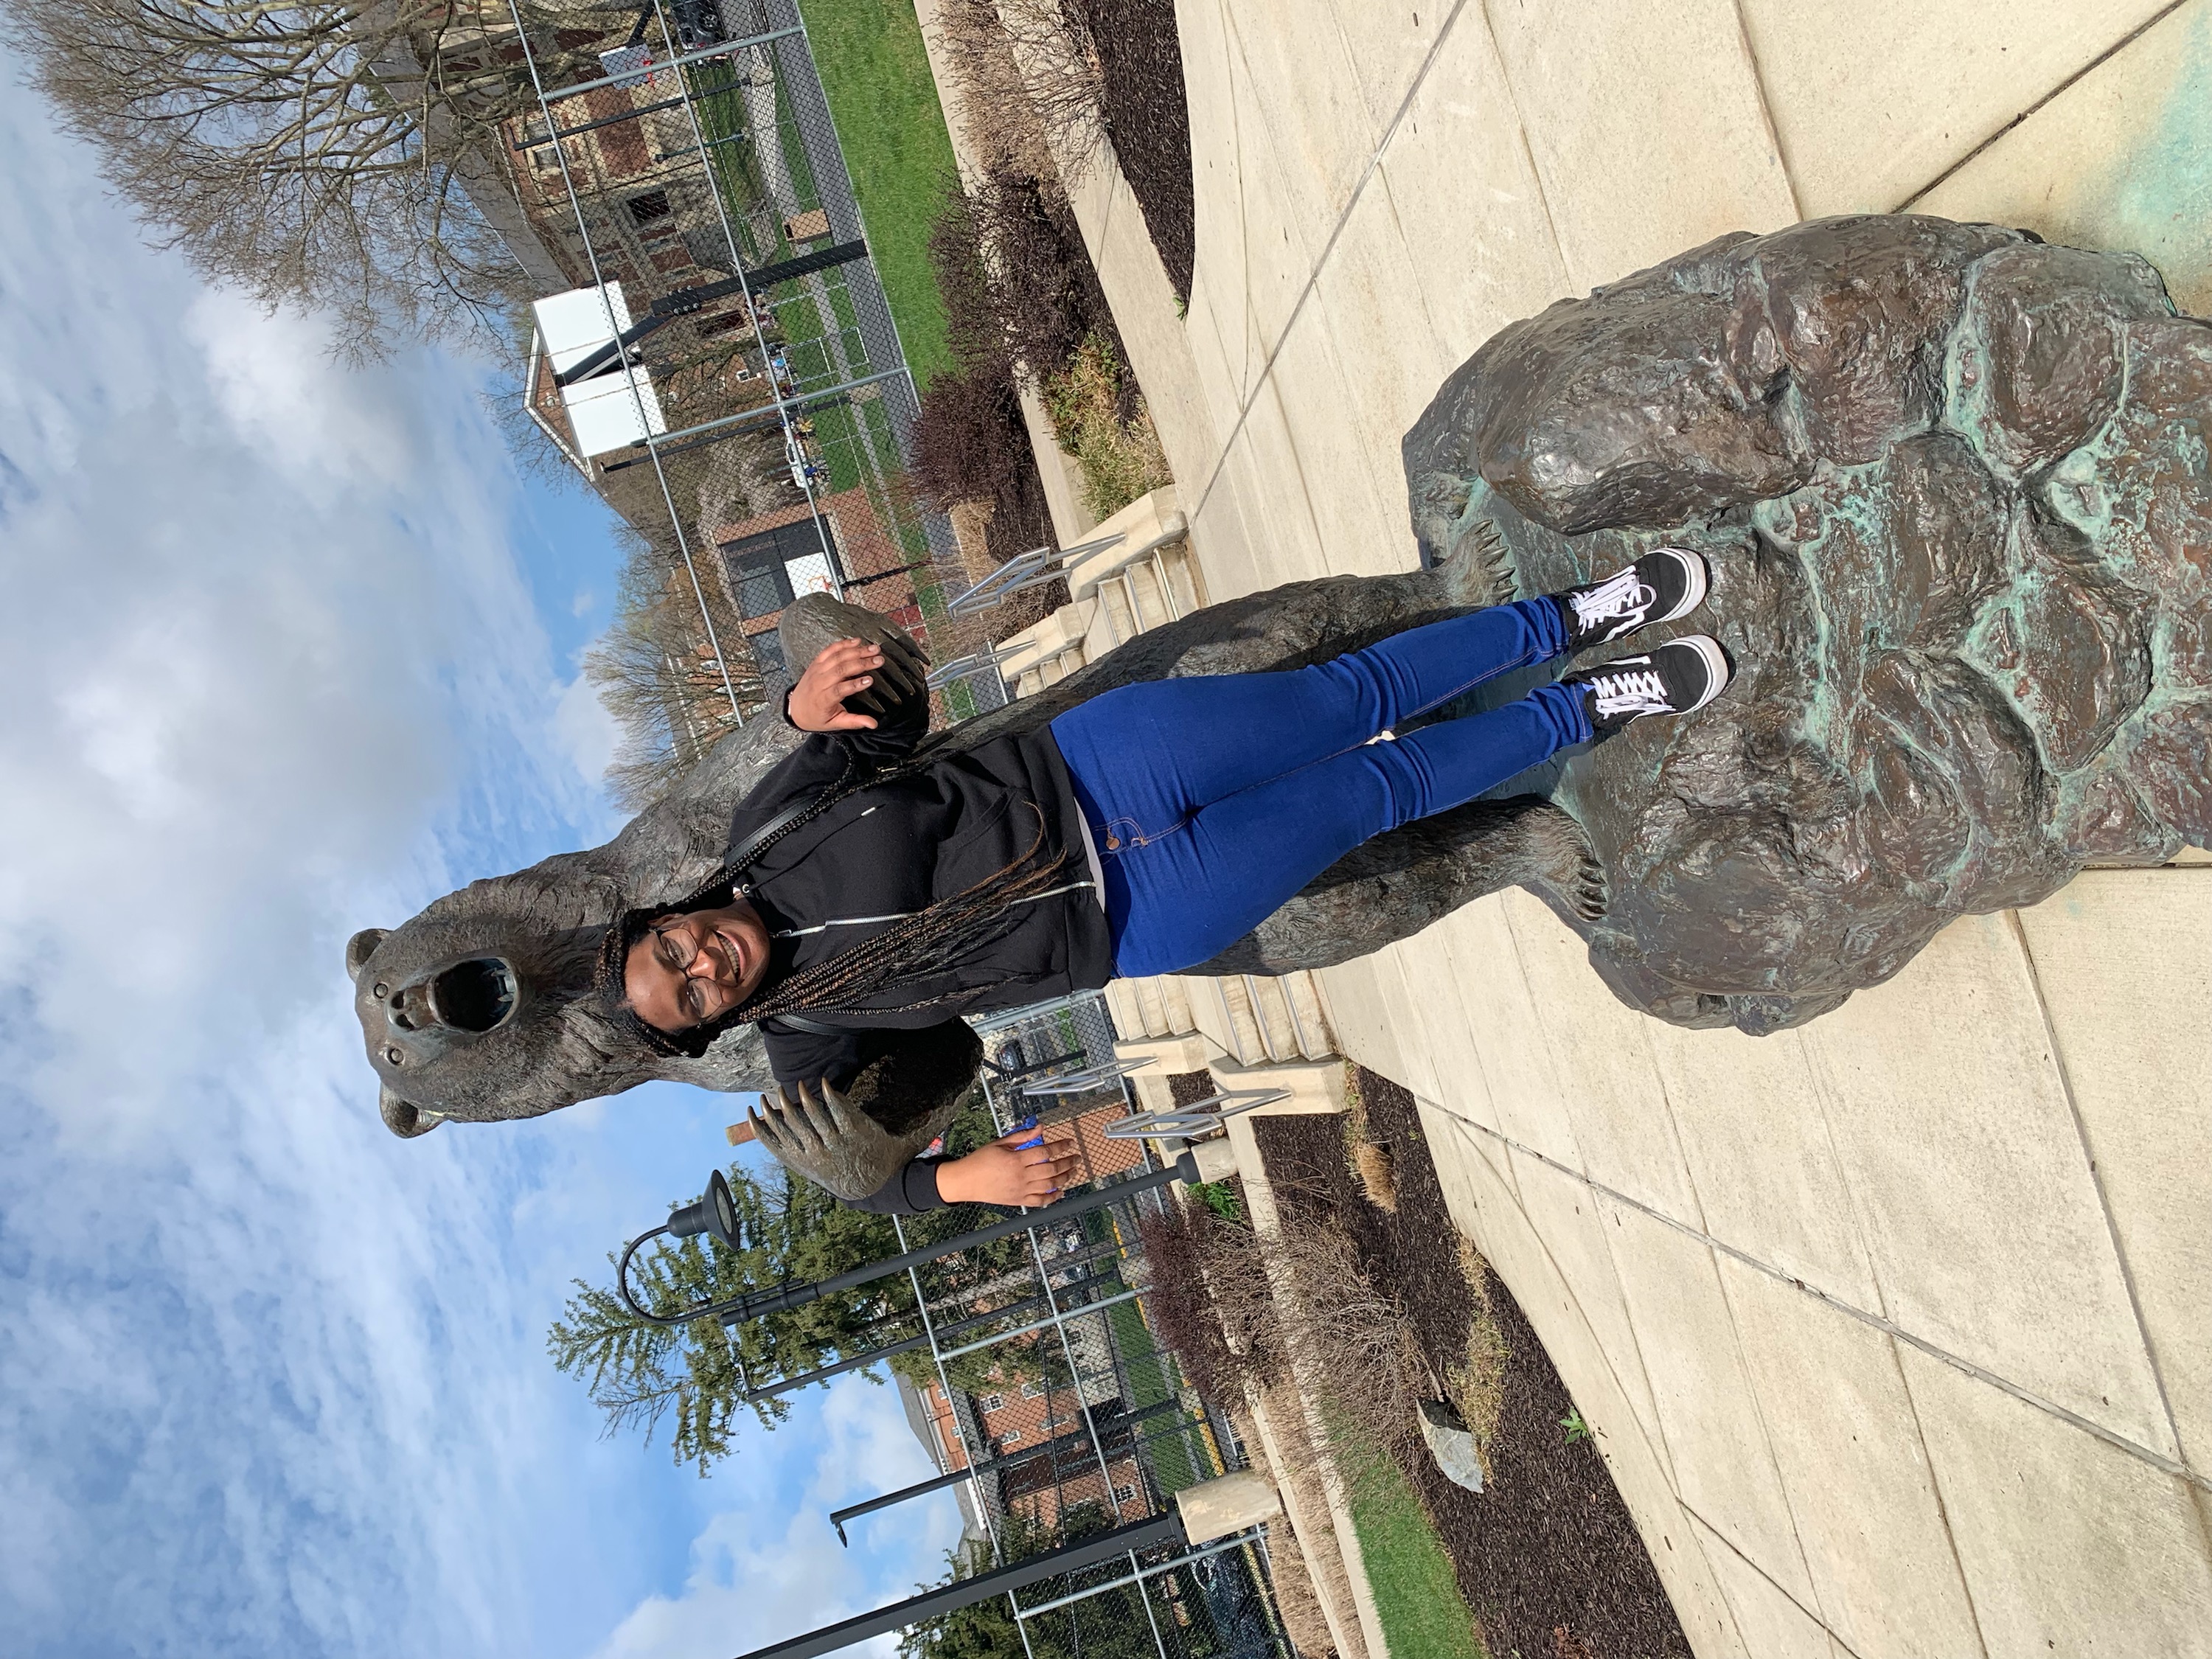 Deborah McKyer posing with the bear statue 